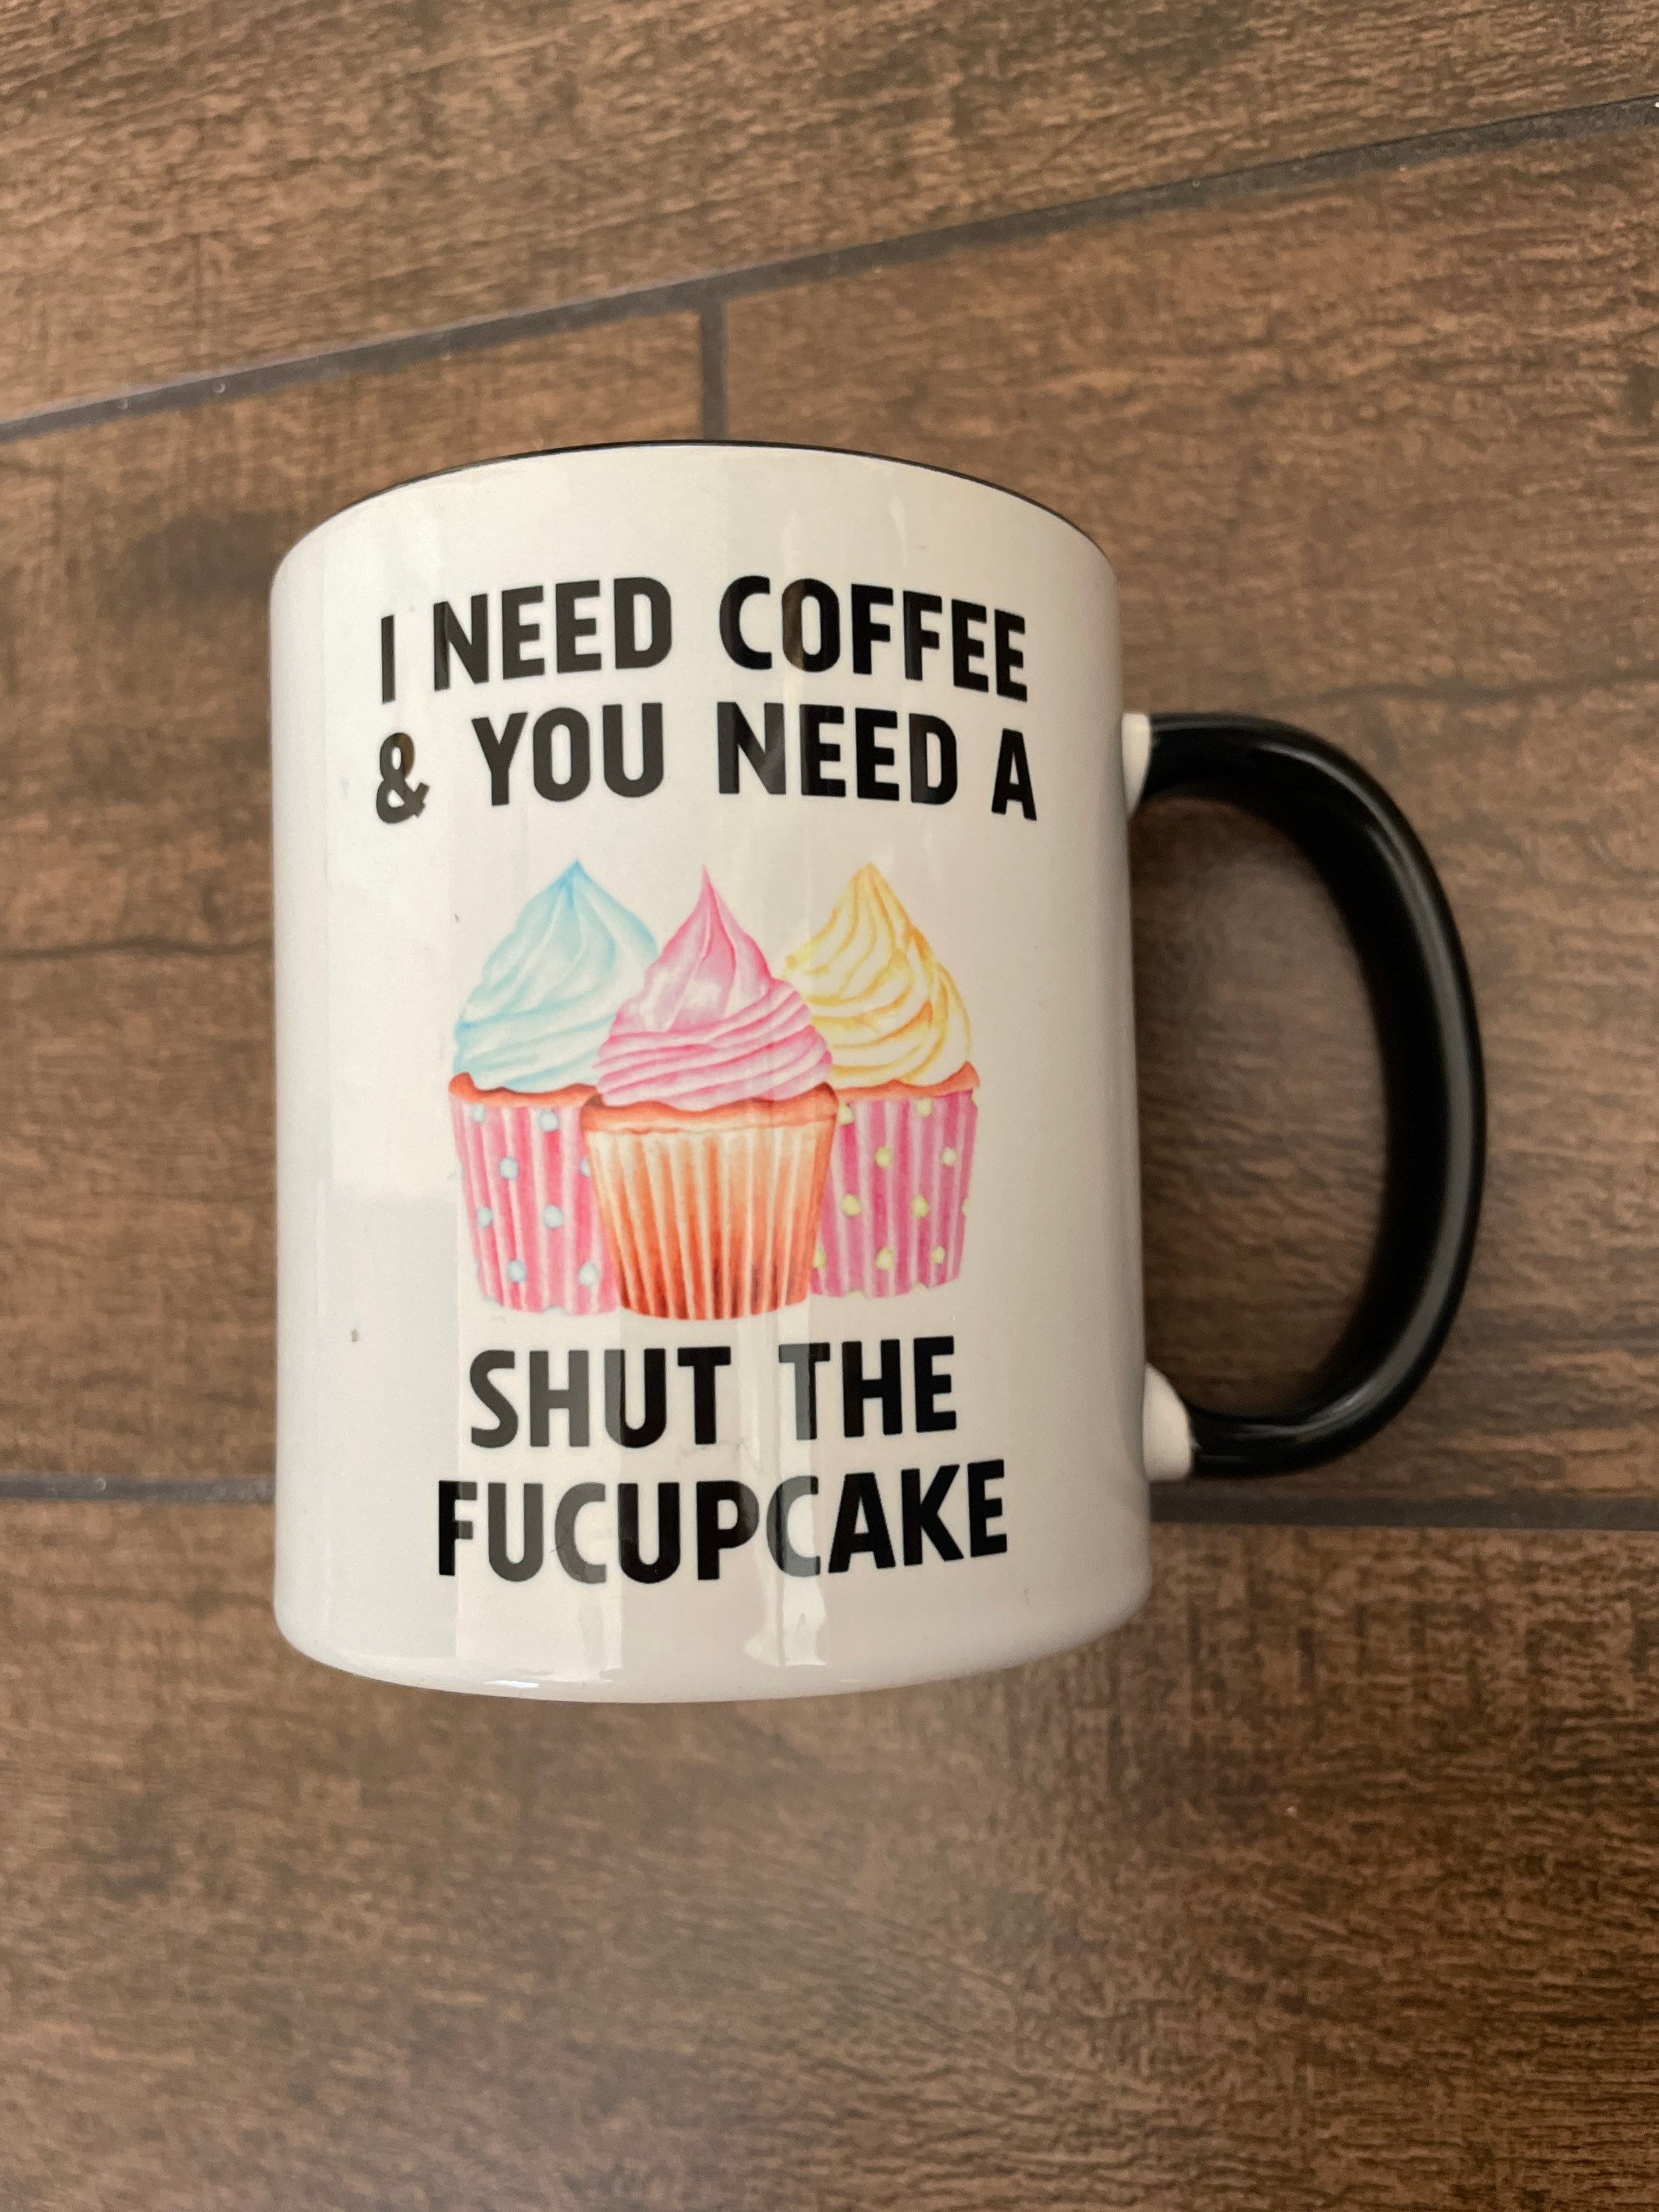 Cupcake mugs Grumpy Gifts office humor adult humor gag gift You need a Shut the Fucupcake Mug coffee mugs